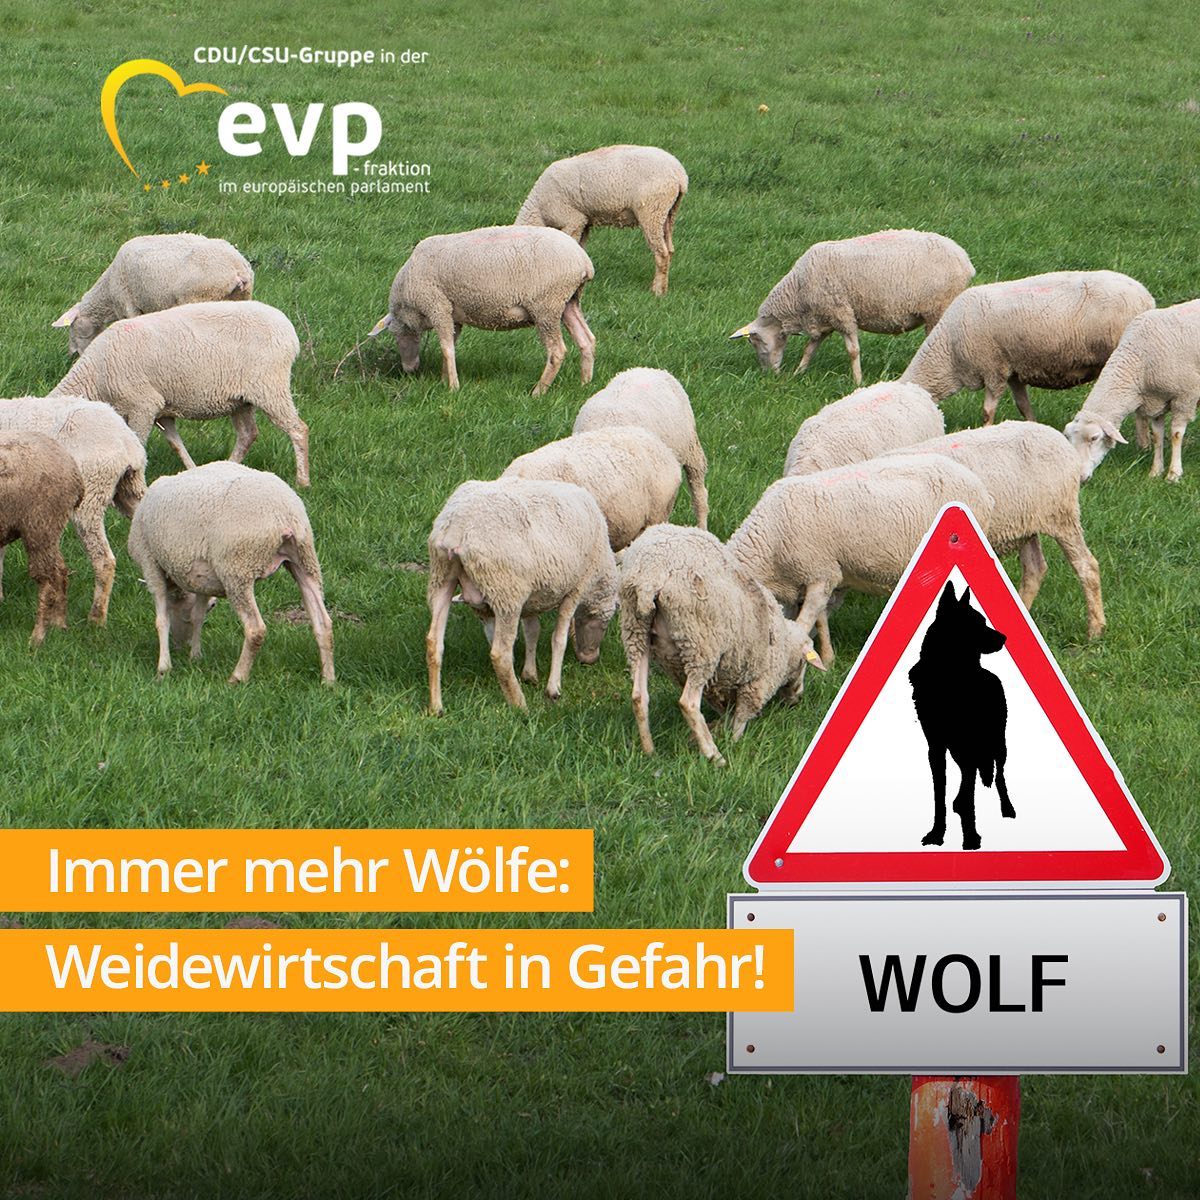 Europaparlament debattiert steigende Wolfspopulation